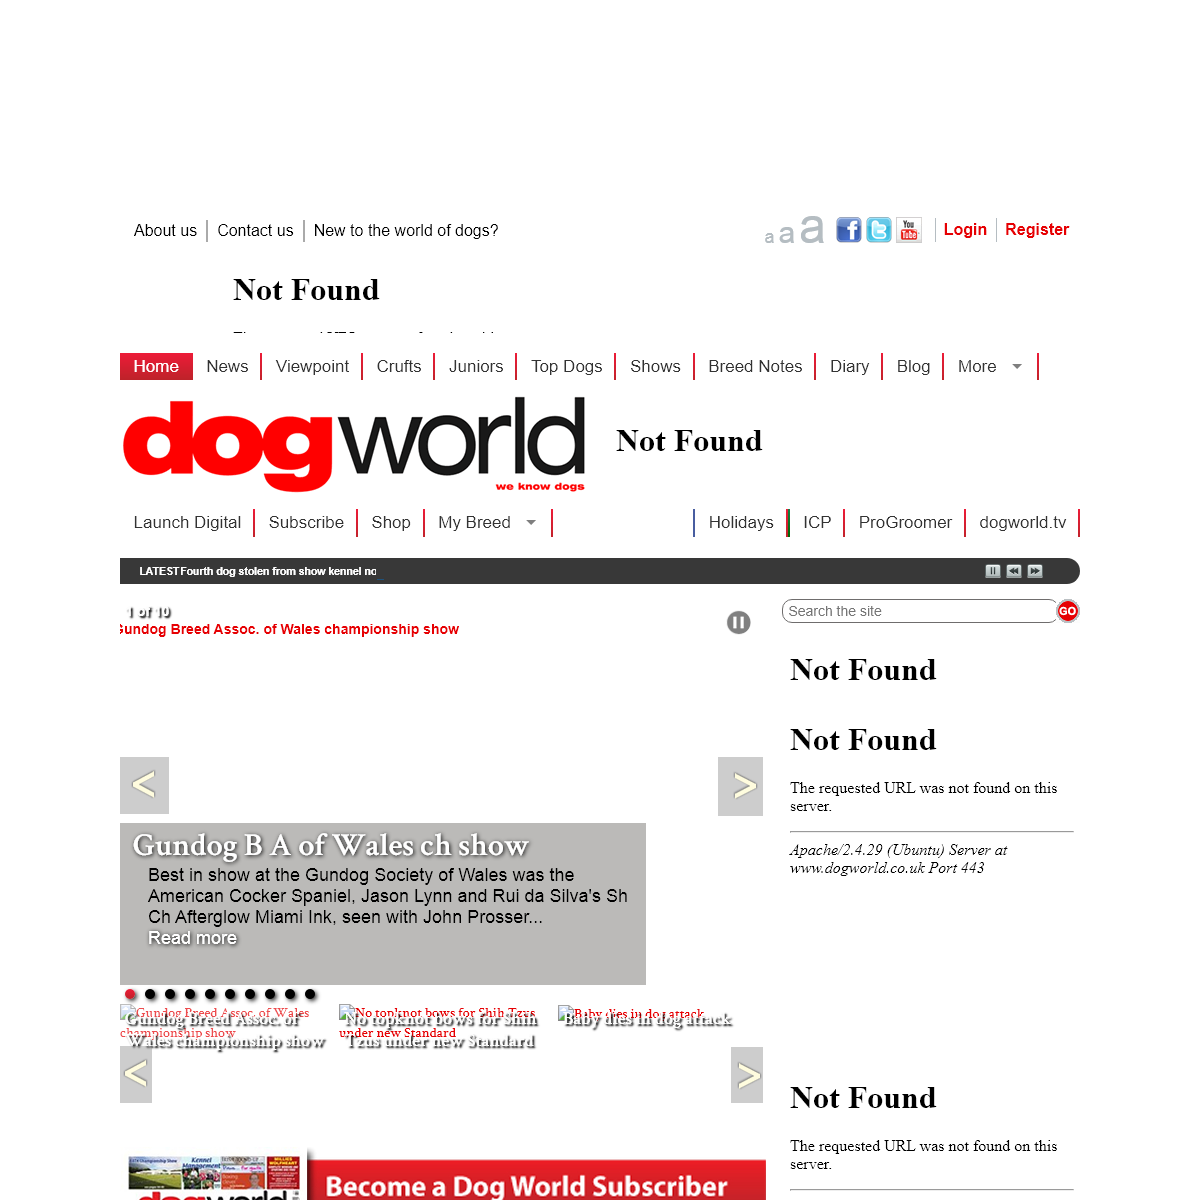 A complete backup of dogworld.co.uk